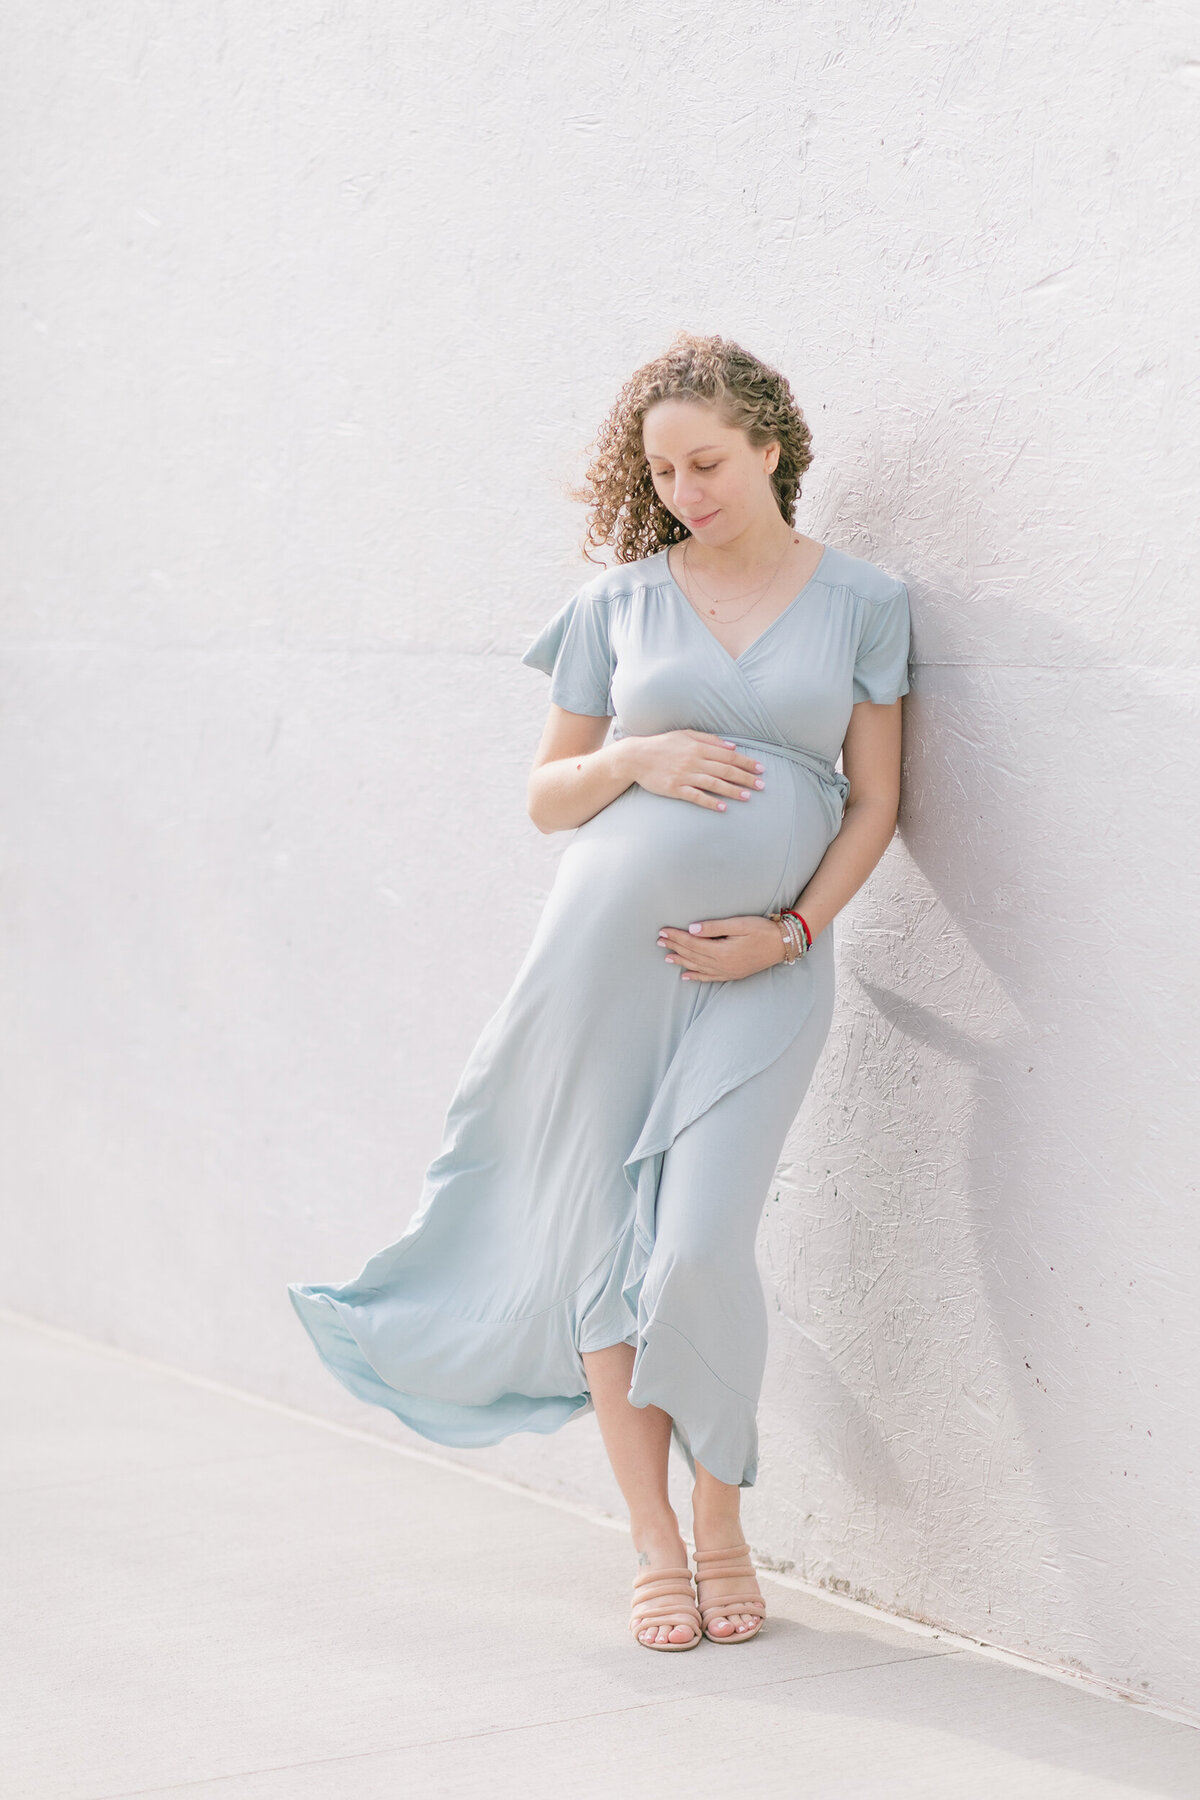 Pregnancy Photoshoot in Long Island City